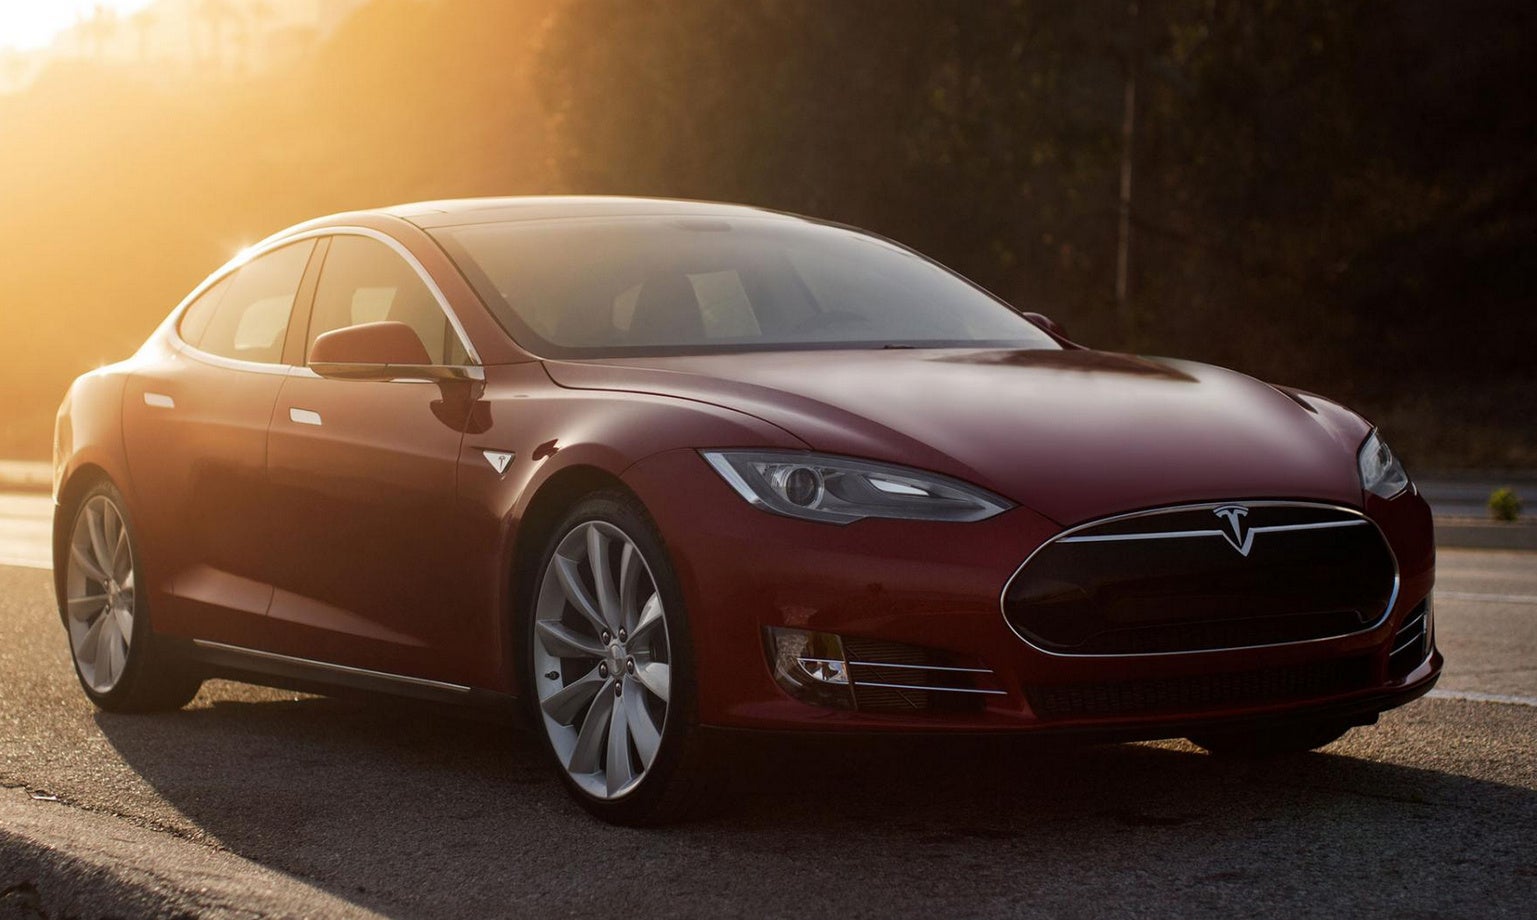 2014 Tesla Model S - Review - CarGurus